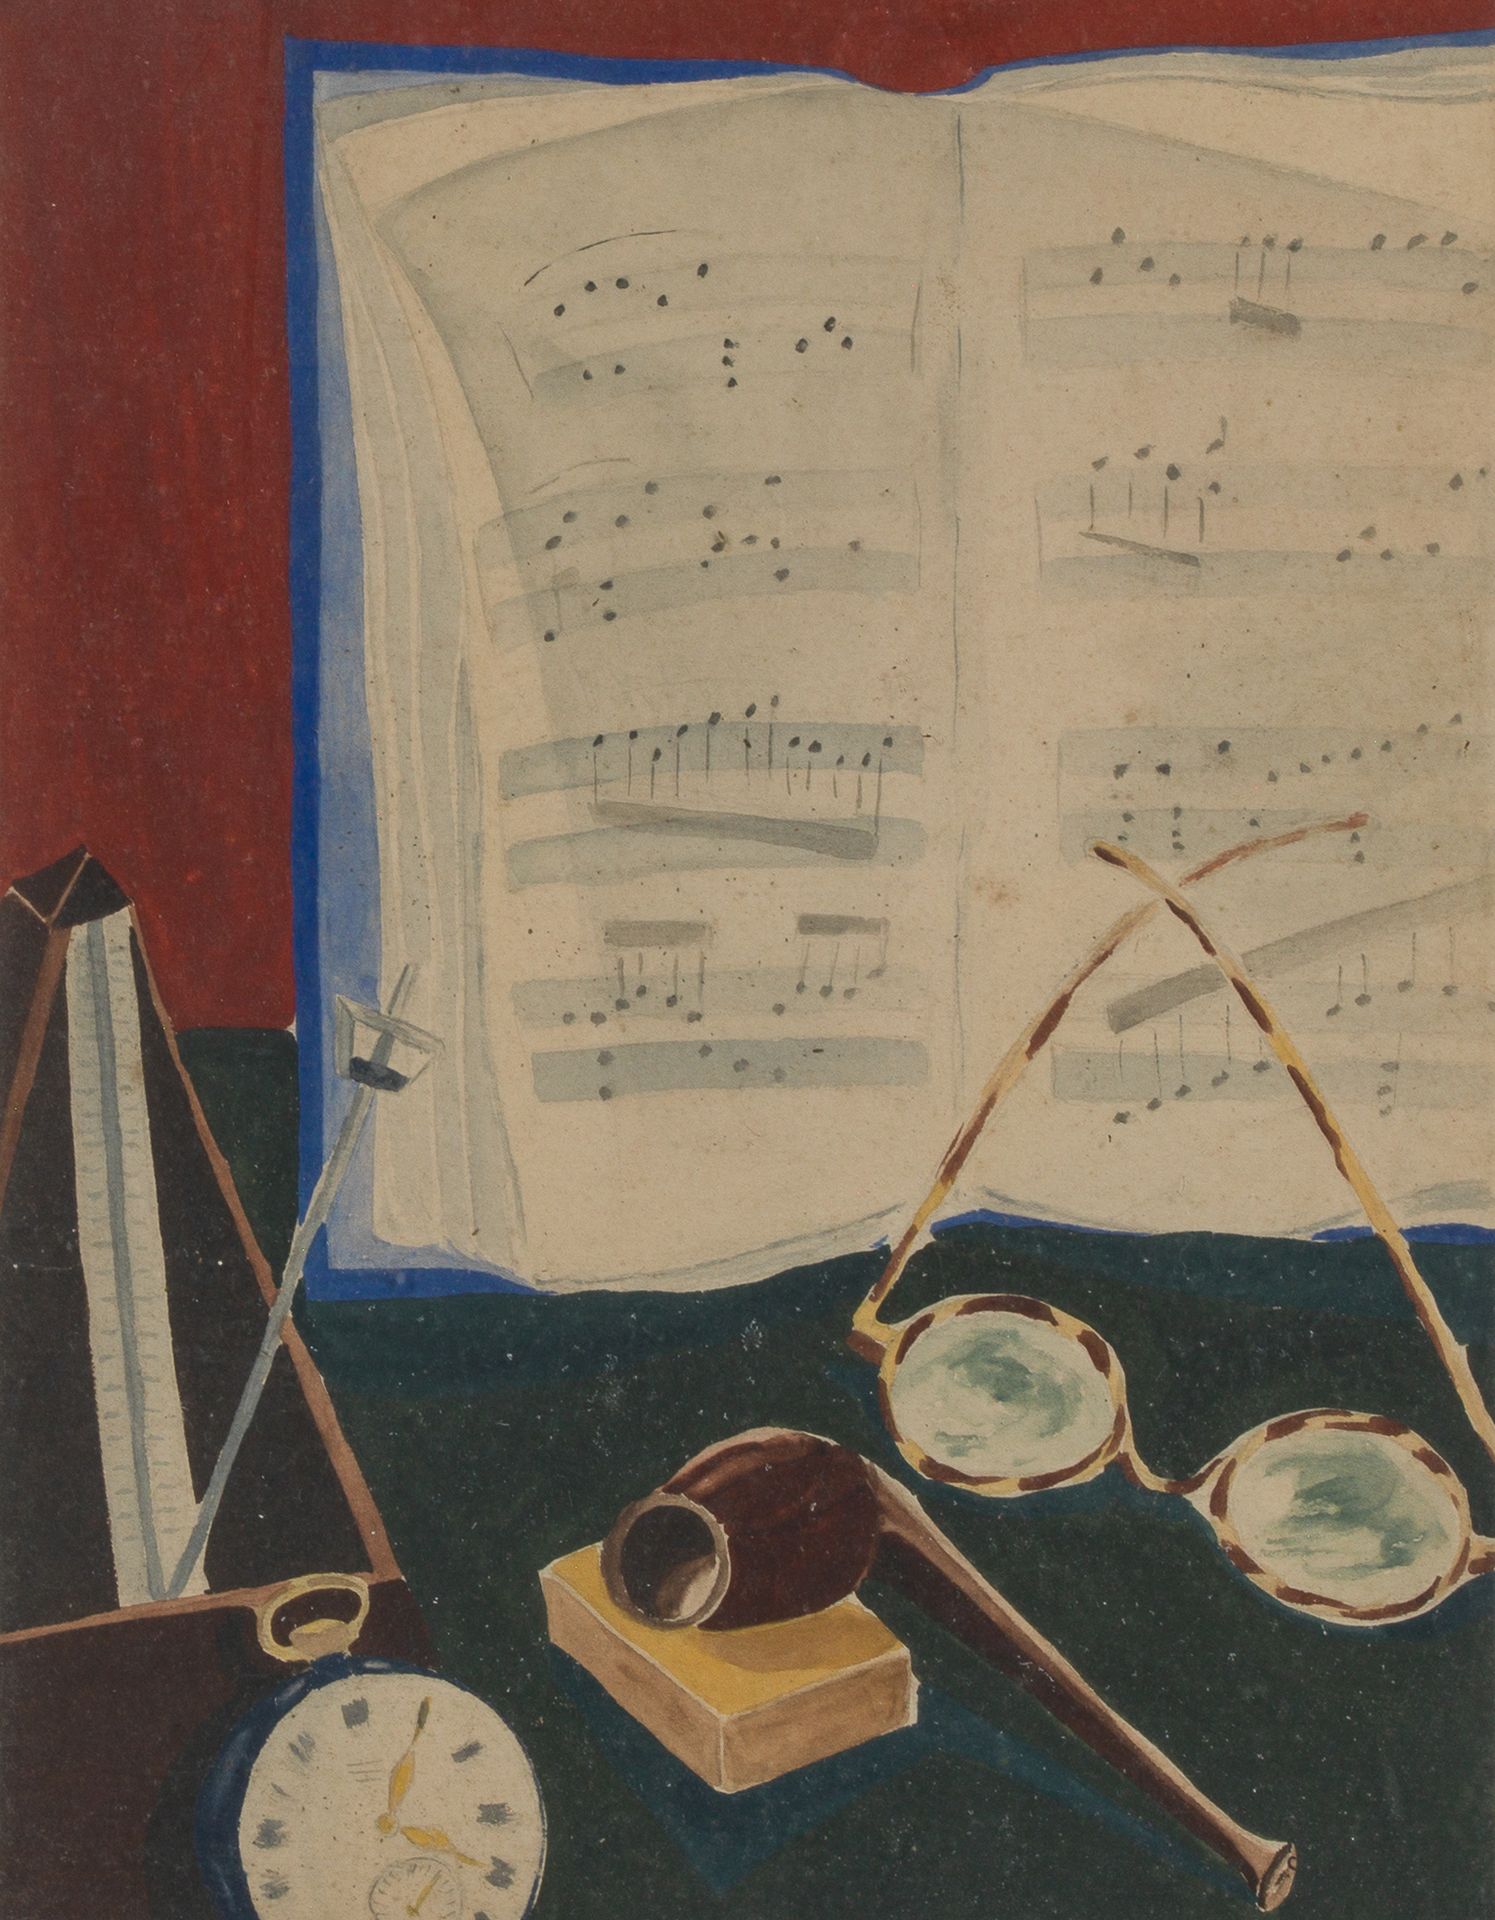 Null J.DECHIN (XX)
静物与乐谱和节拍器，1931年
纸上水粉画，右下方有签名和日期
30.5 x 23 cm